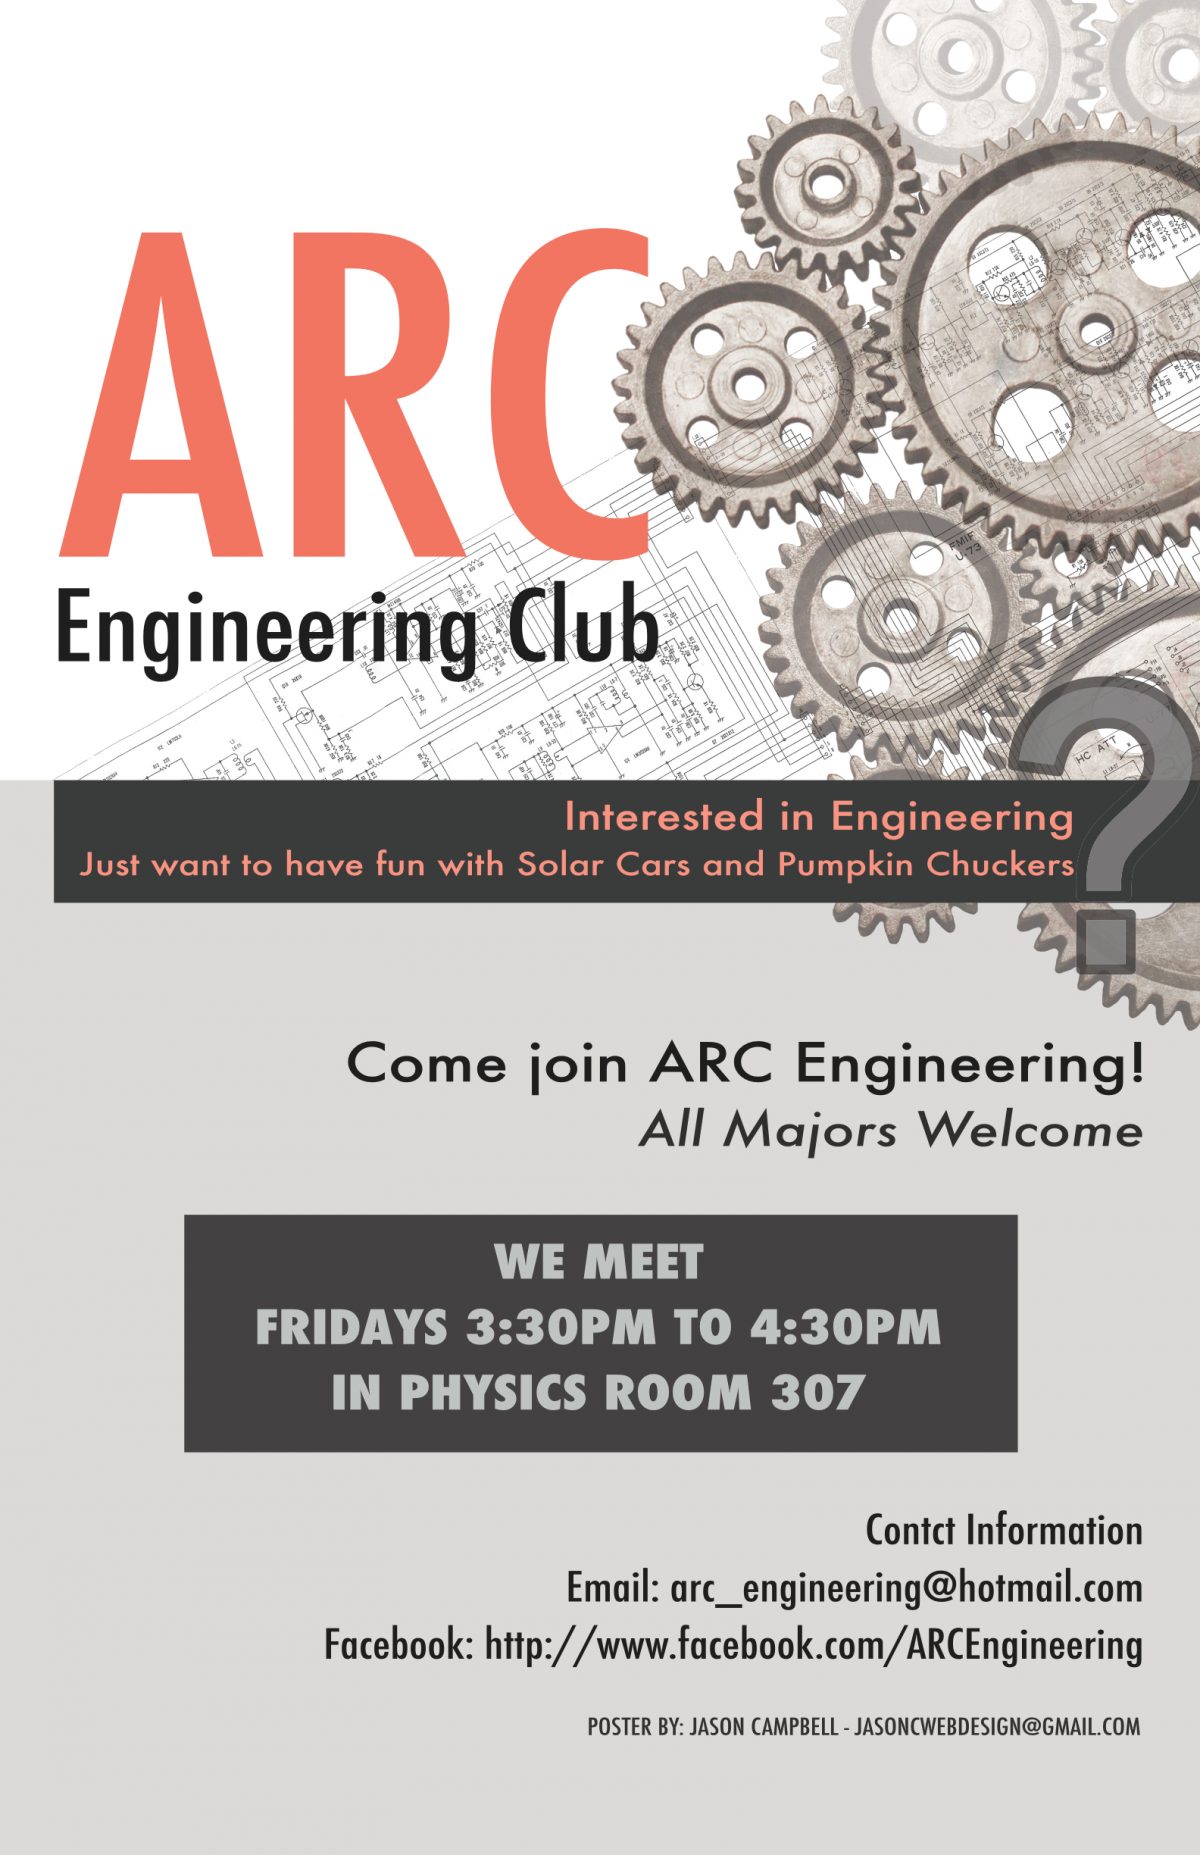 ARC Engineering Club Poster Design